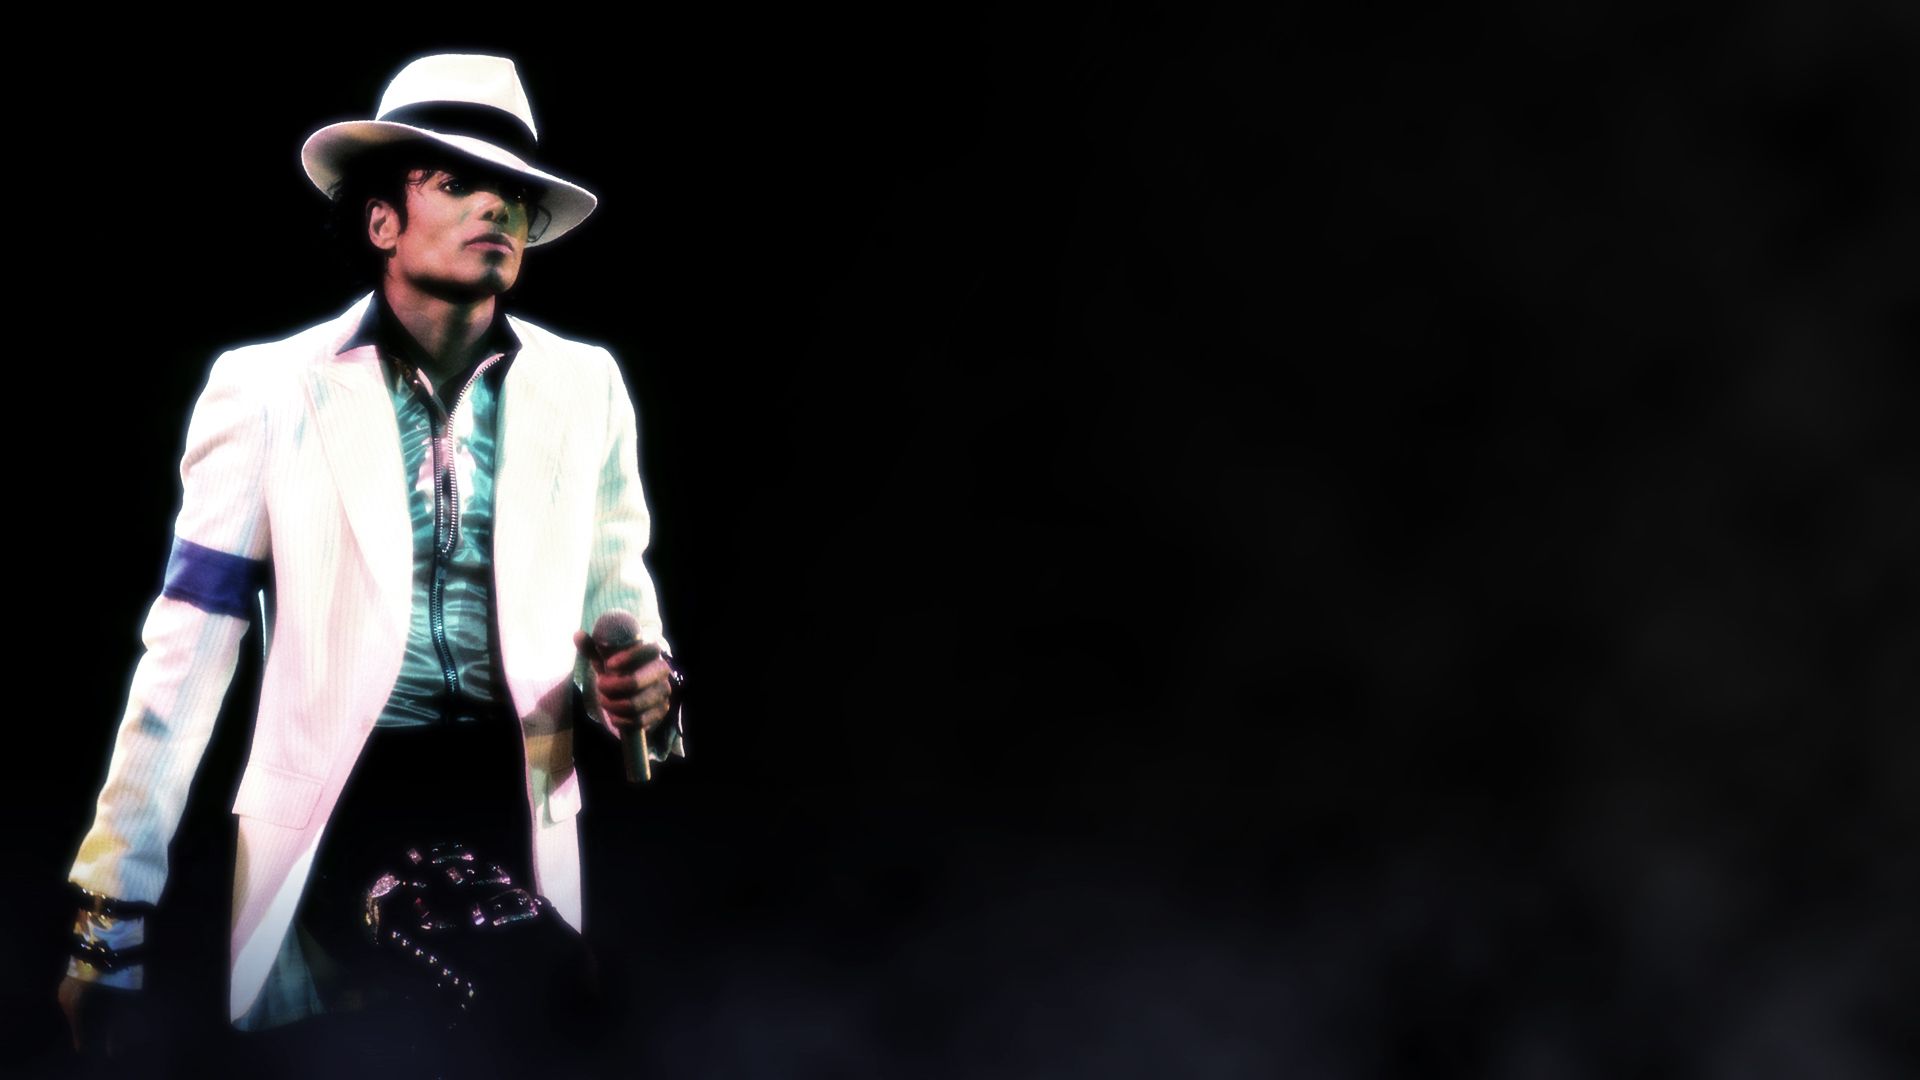 Michael Jackson Wallpaper Download - Widescreen HD Backgrounds